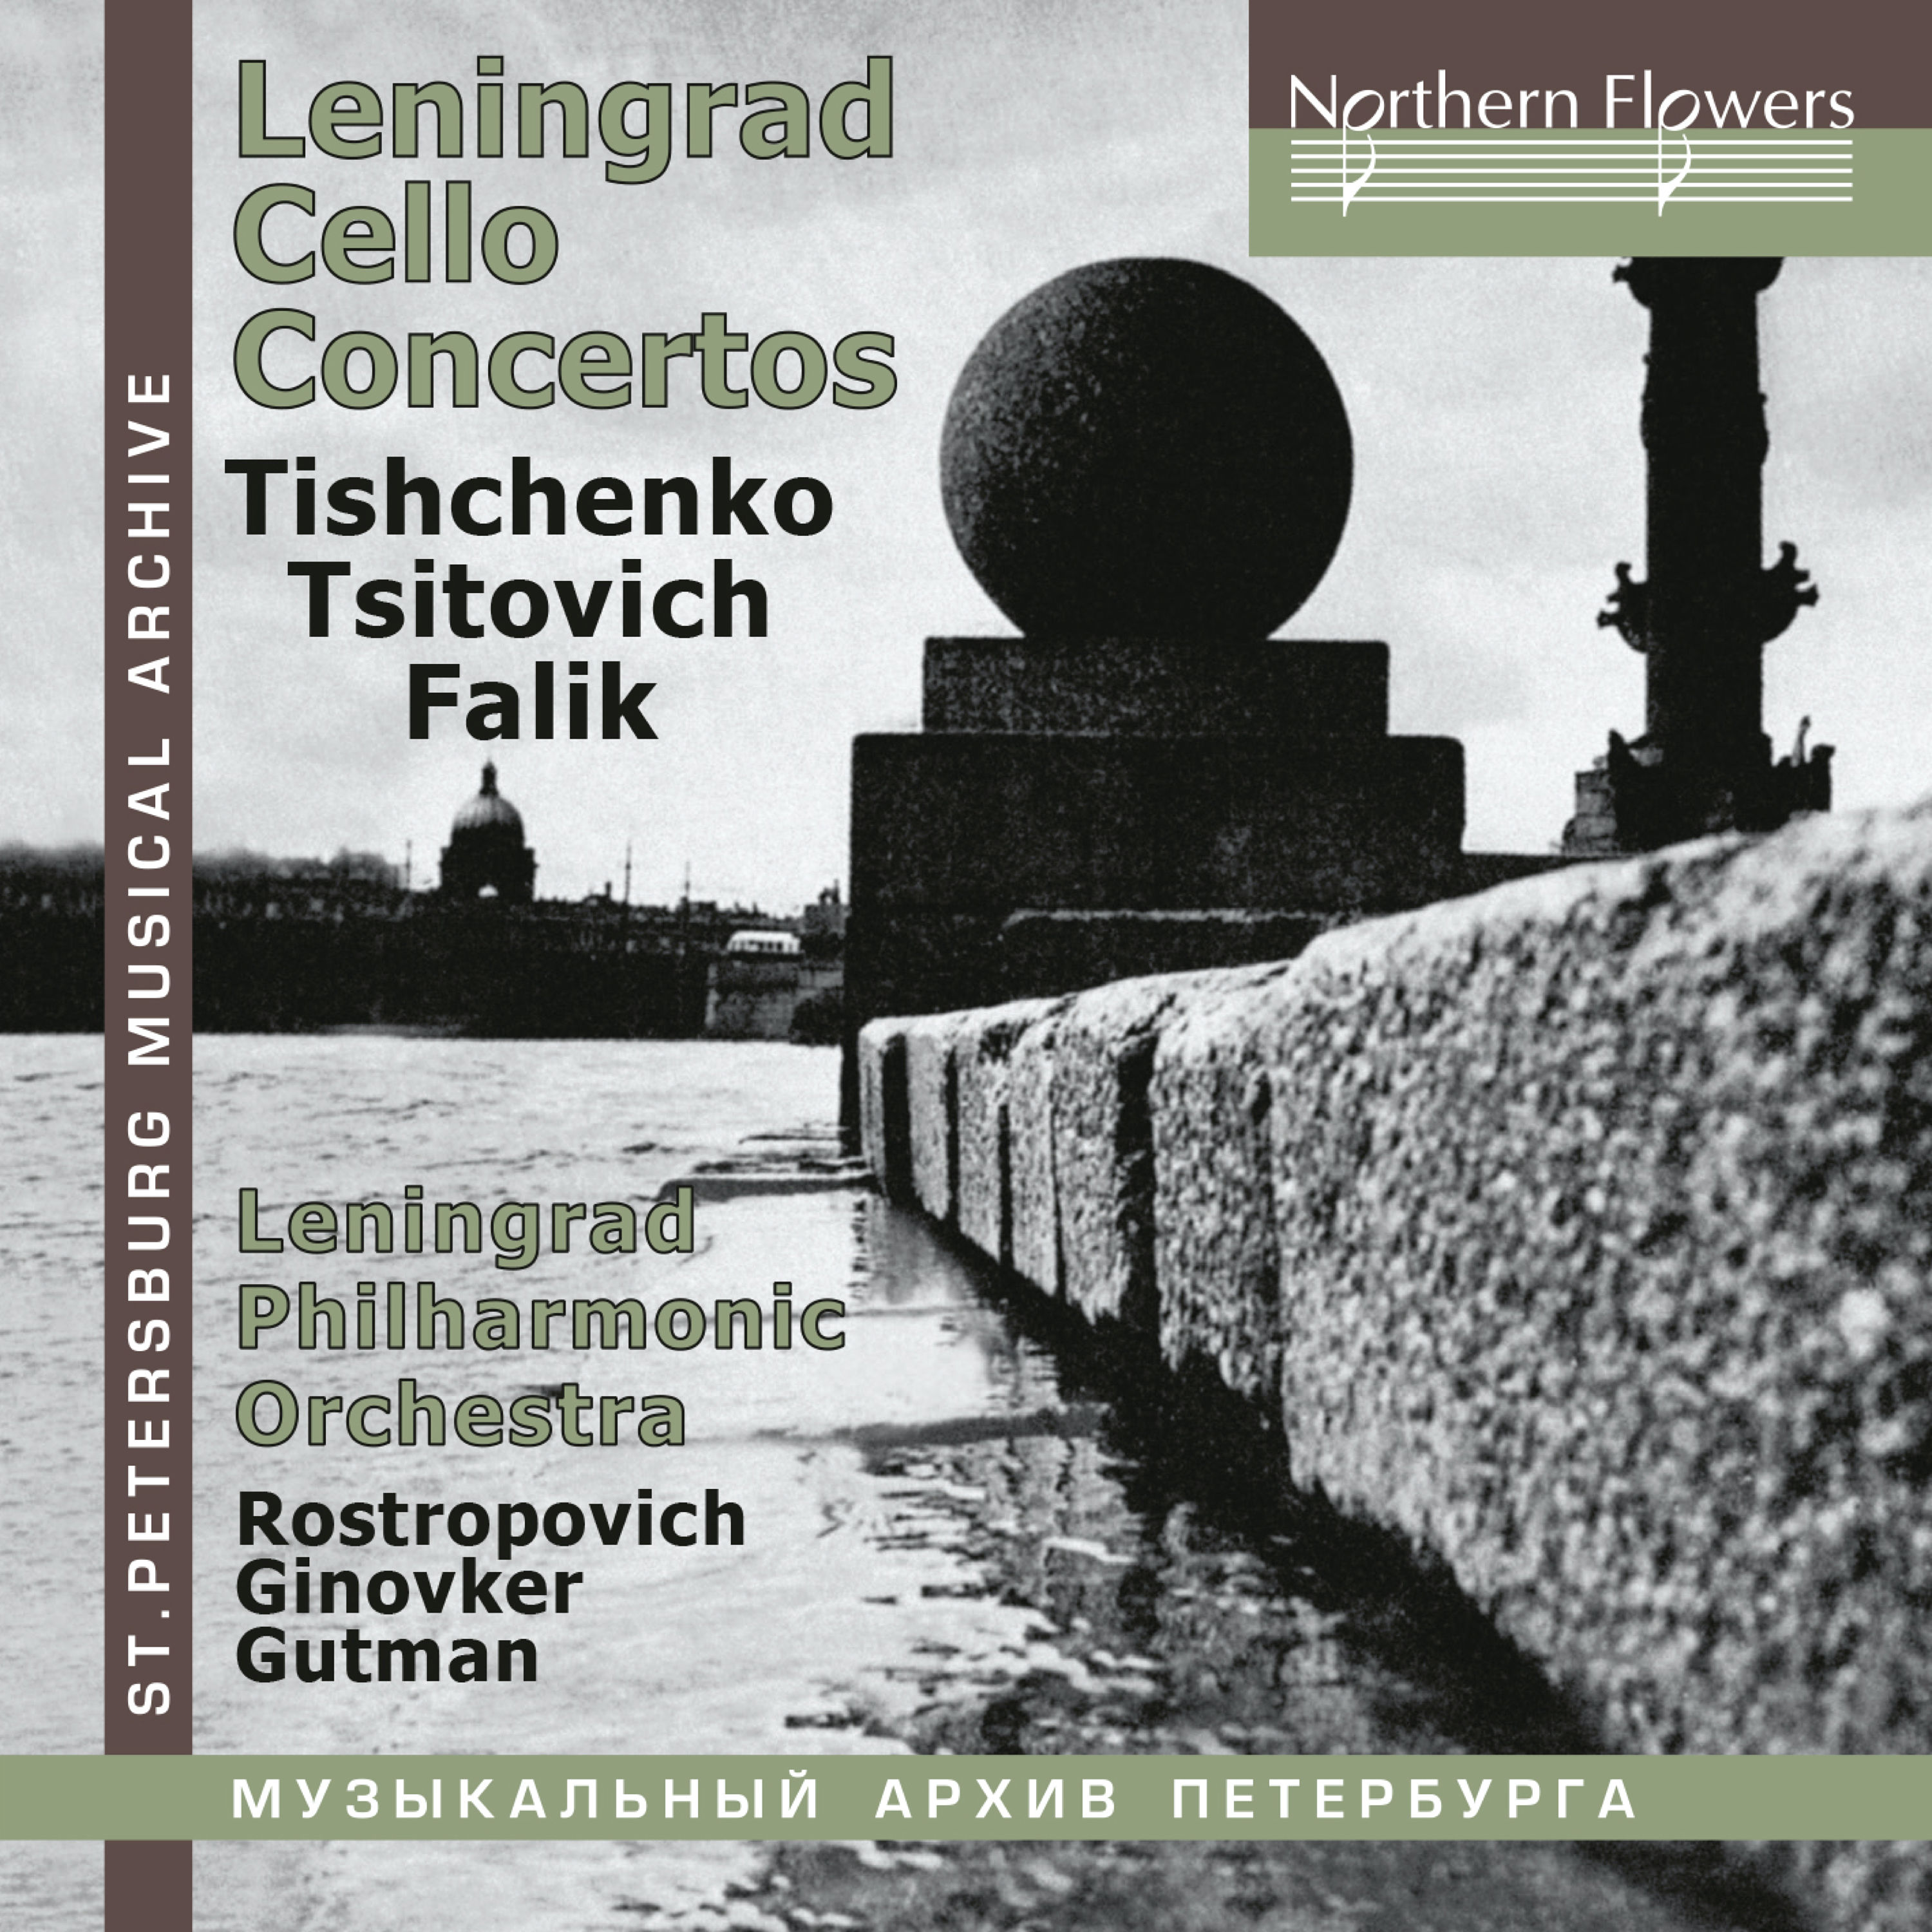 London Symphony Orchestra, Rostropovich, Gutman, Ginovker – Leningrad Cello Concertos: Tishchenko, Tzitovich, Falik (2020) [FLAC 24bit/96kHz]